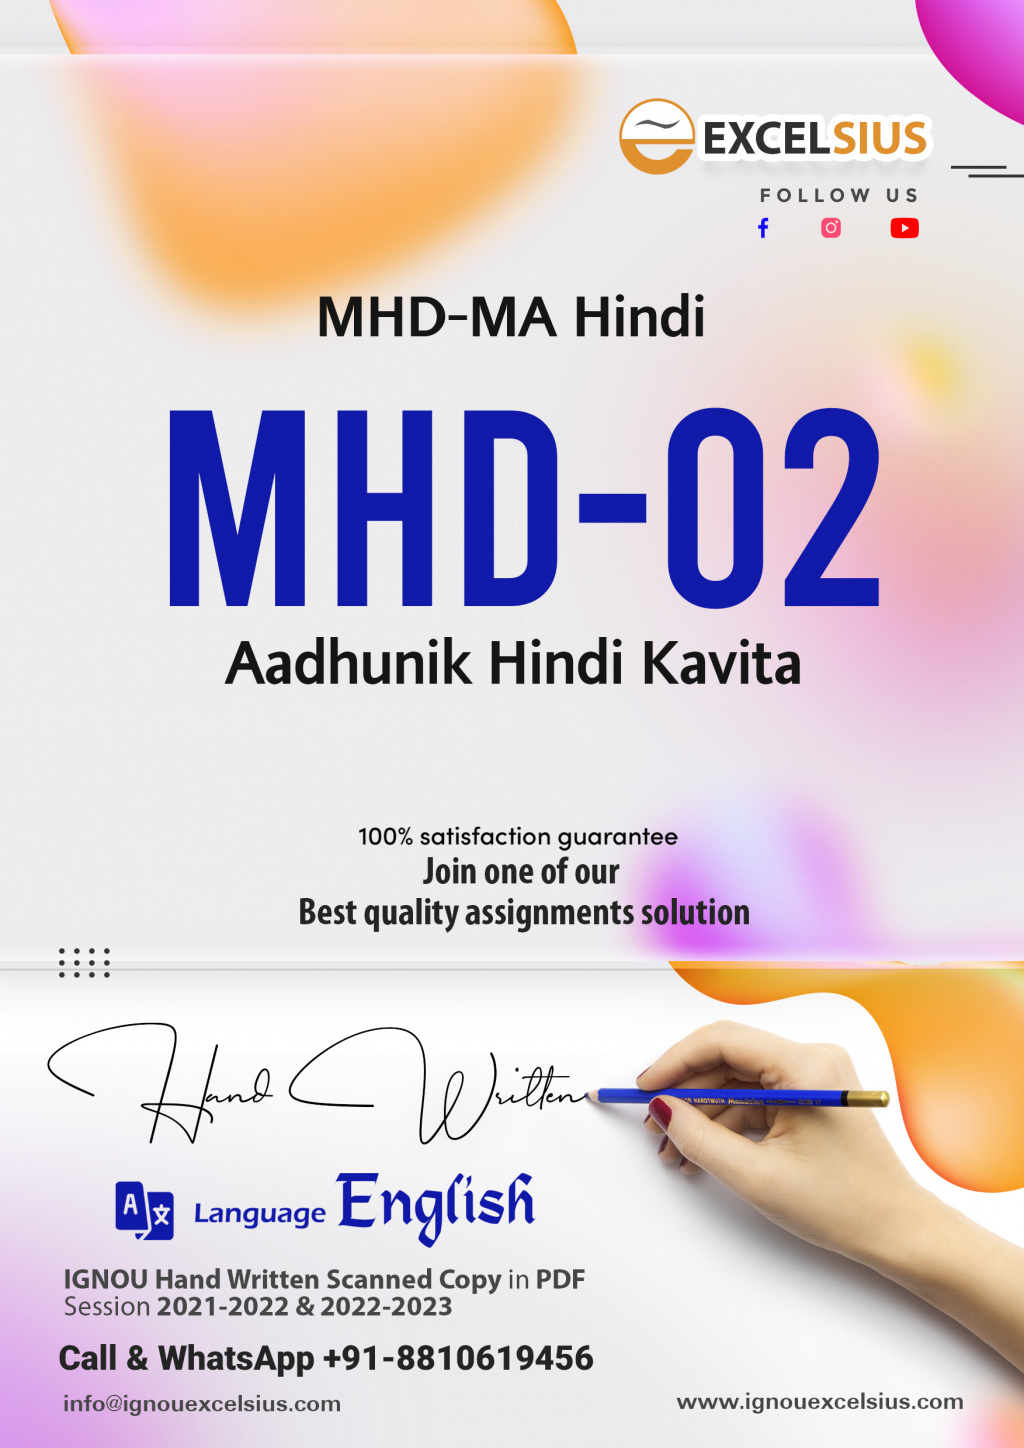 IGNOU MHD-02 - Aadhunik Hindi Kavita Latest Solved Assignment-July 2022 – January 2023